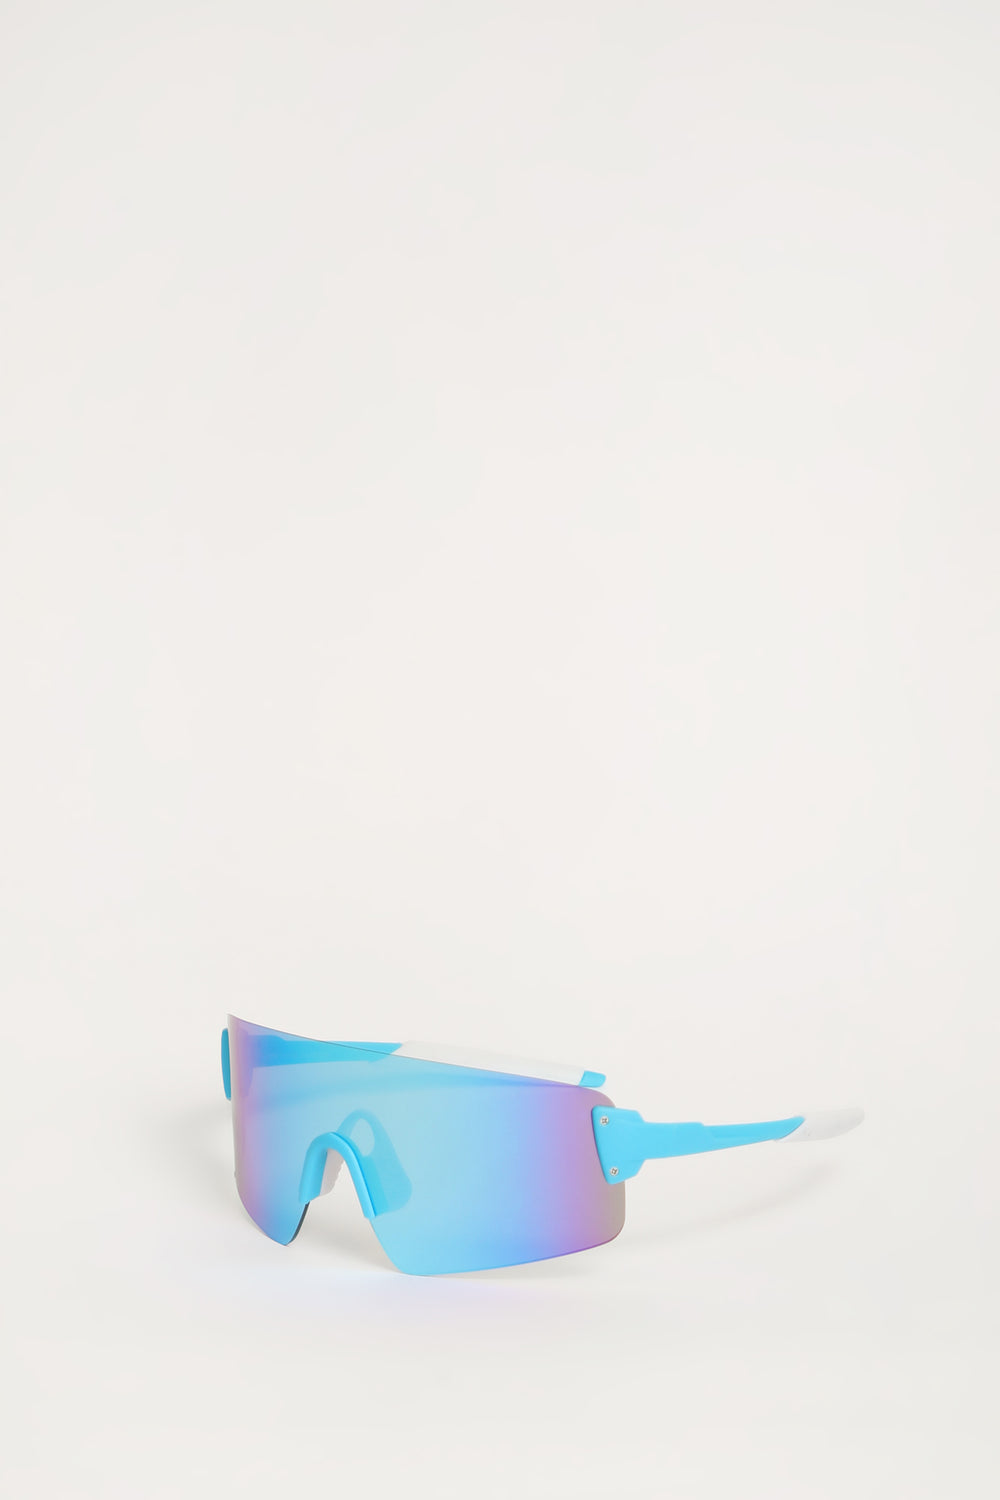 West49 Light Blue Shield Sunglasses West49 Light Blue Shield Sunglasses